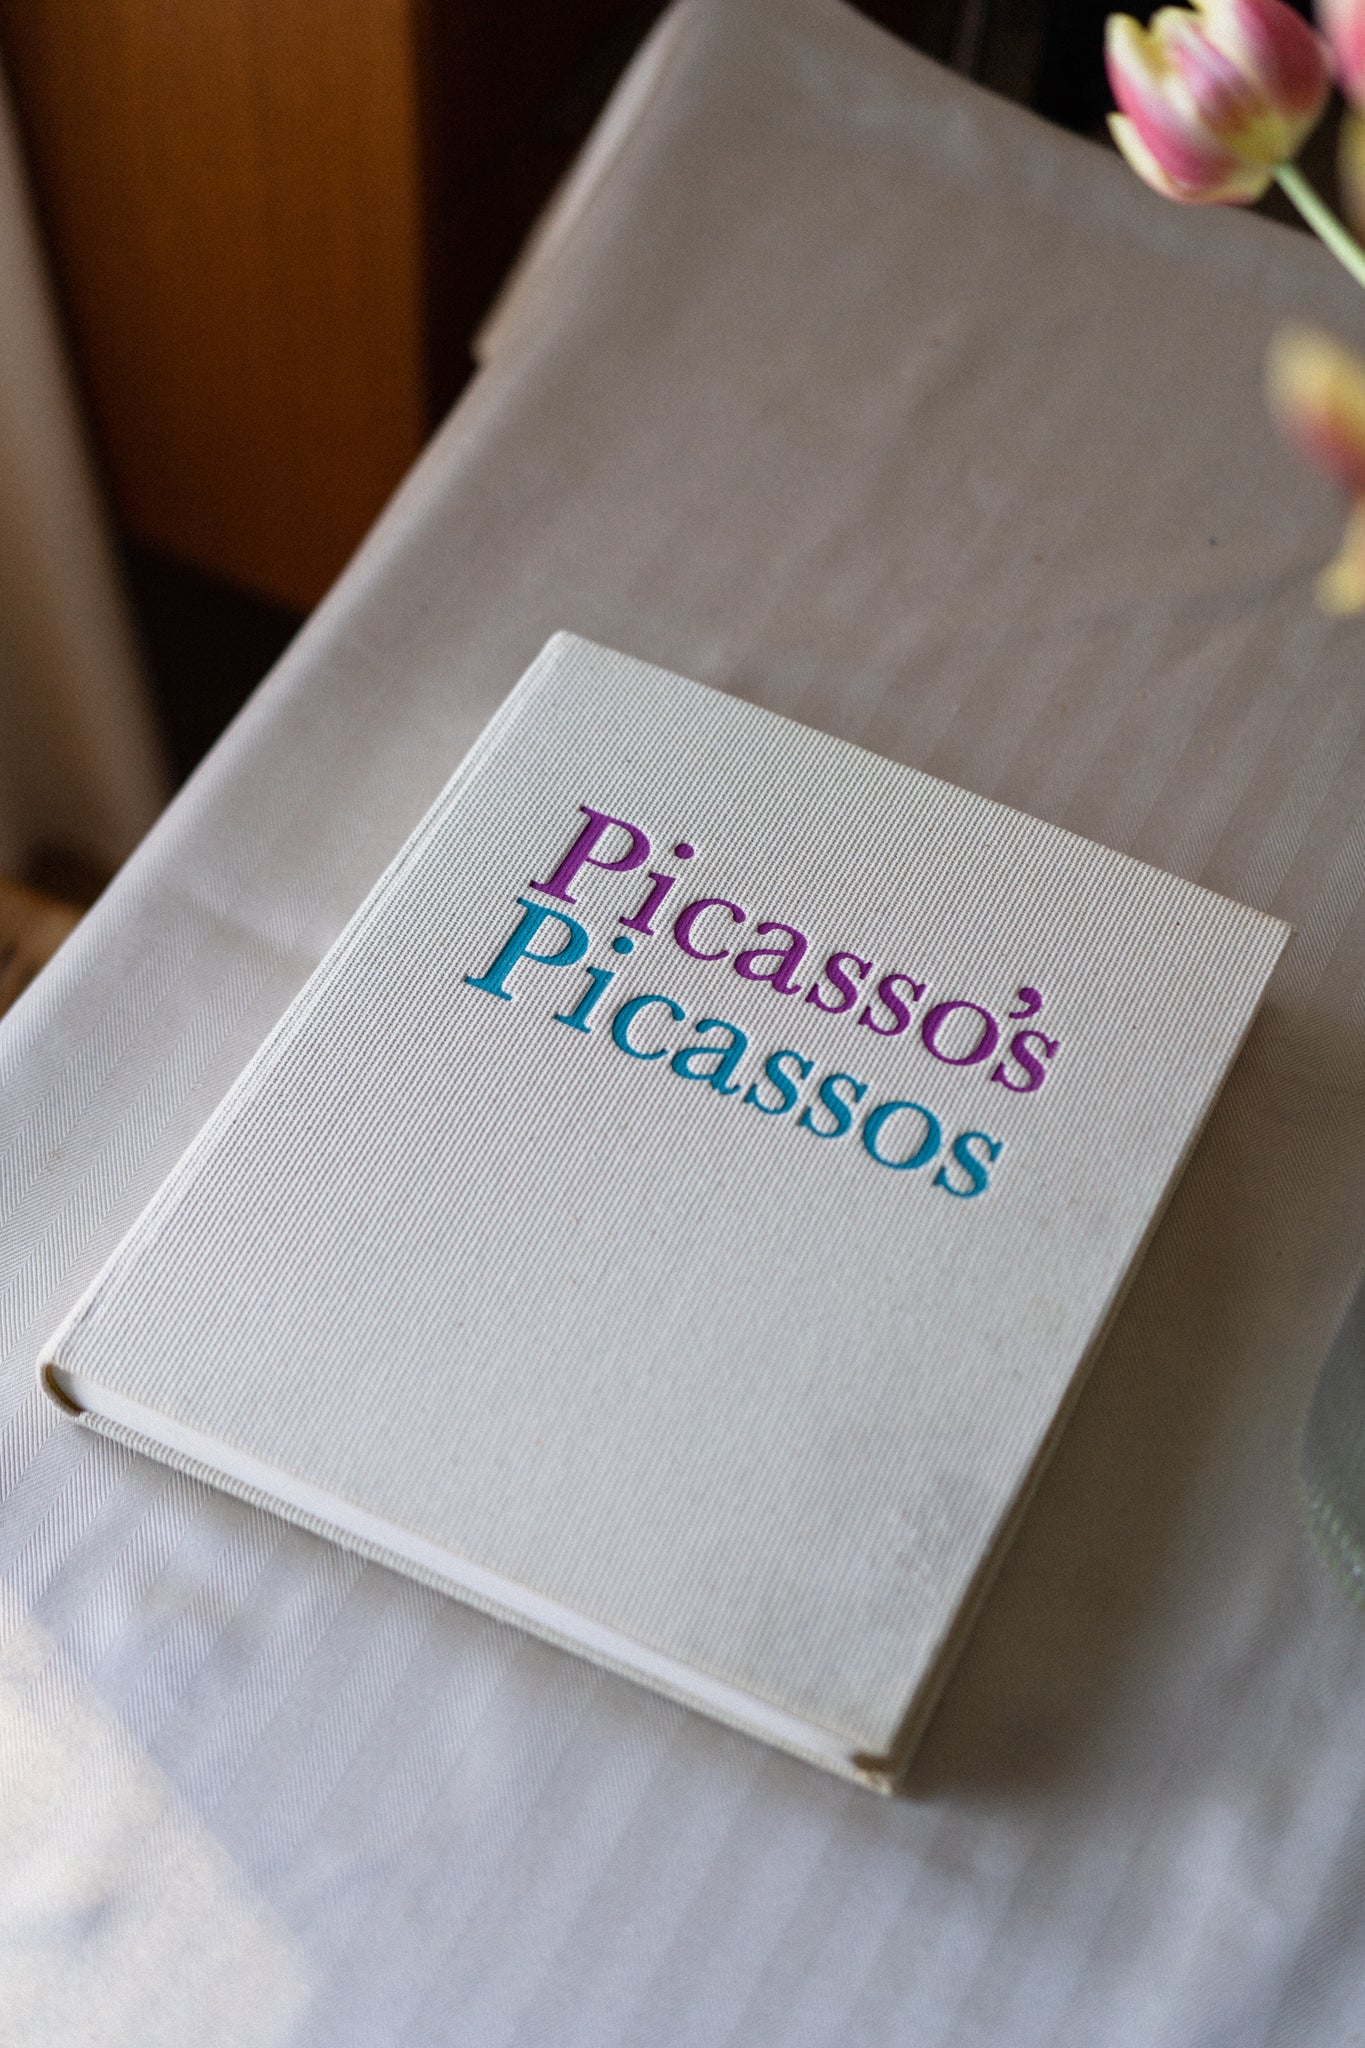 Picasso's Picasso (1961)